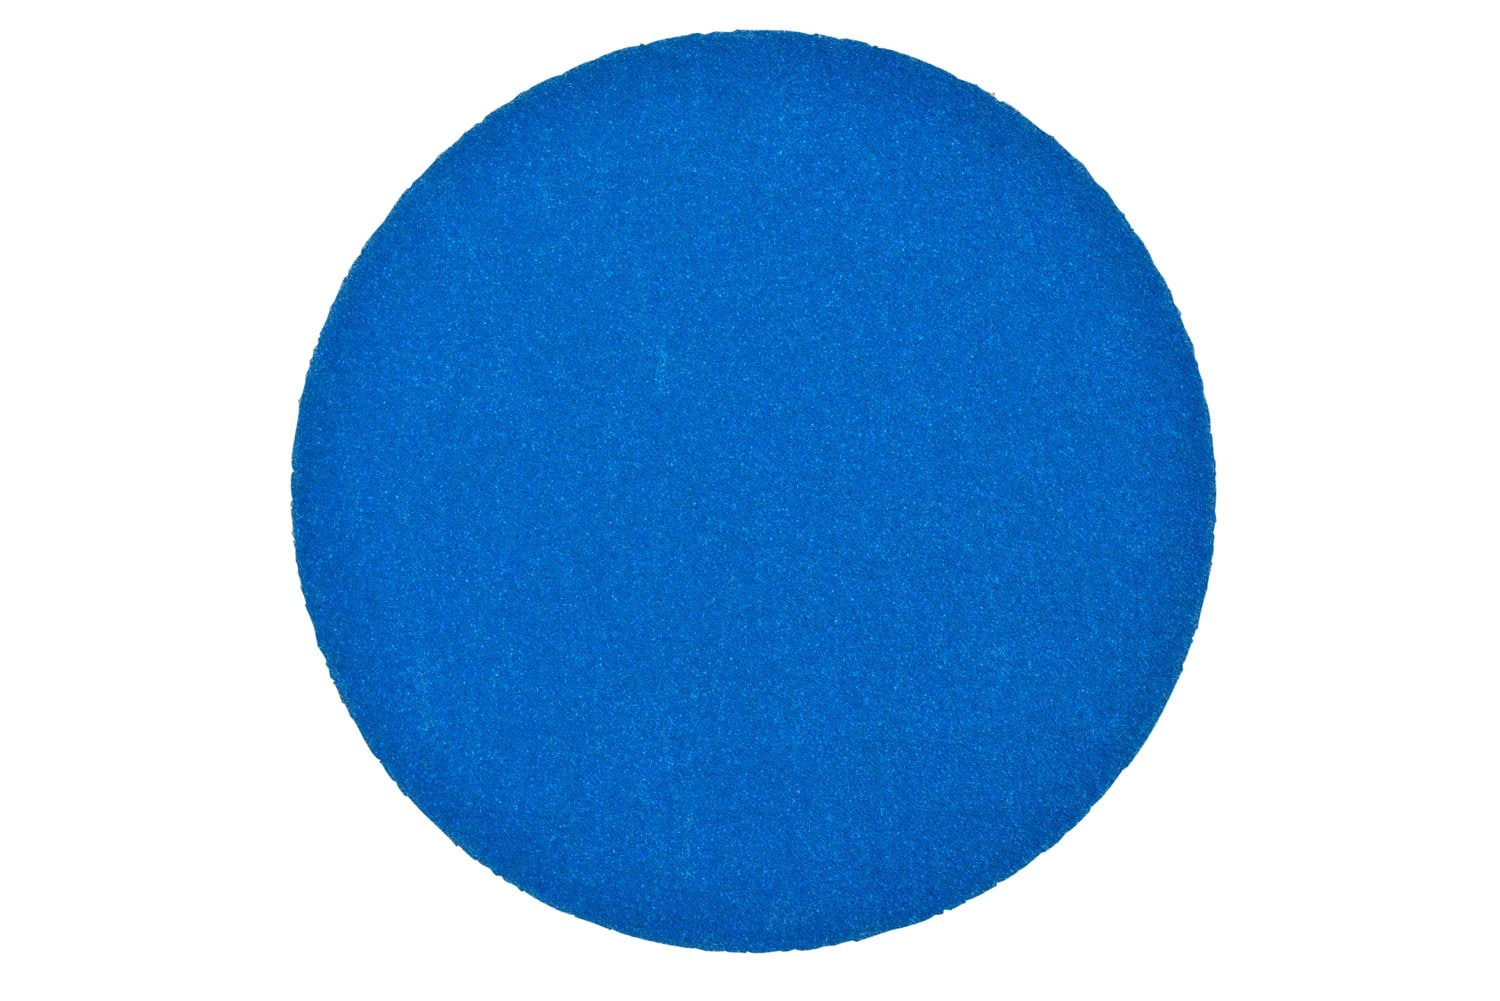 7100199638 - 3M Hookit Blue Abrasive Disc, 36244, 6 in, 180 grade, No Hole, 50 discs per carton, 4 cartons per case